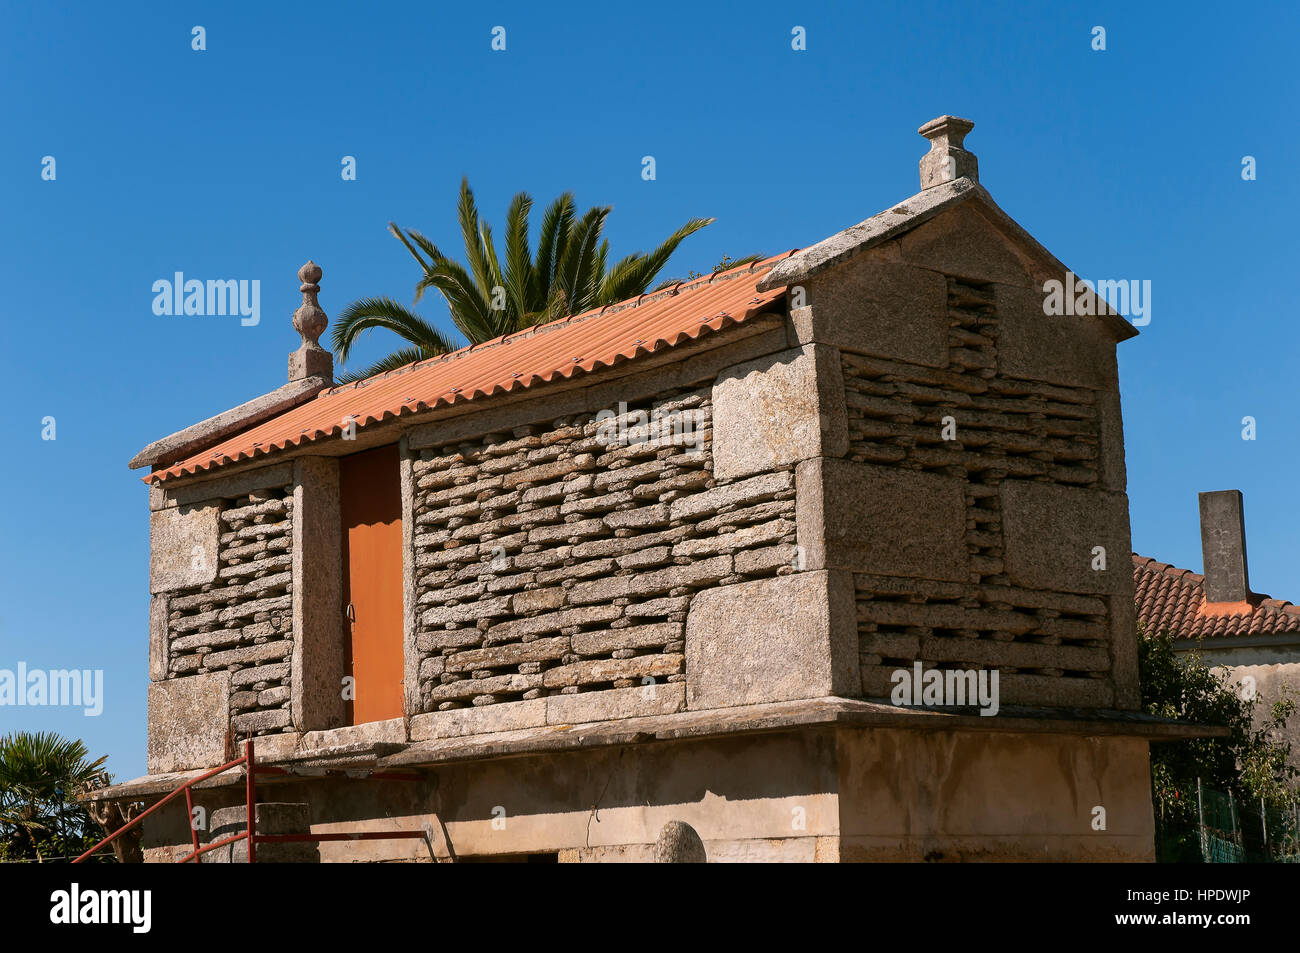 Traditional galician Horreo (granary), Malpica de Bergantiños, La Coruña province, Region of Galicia, Spain, Europe Stock Photo